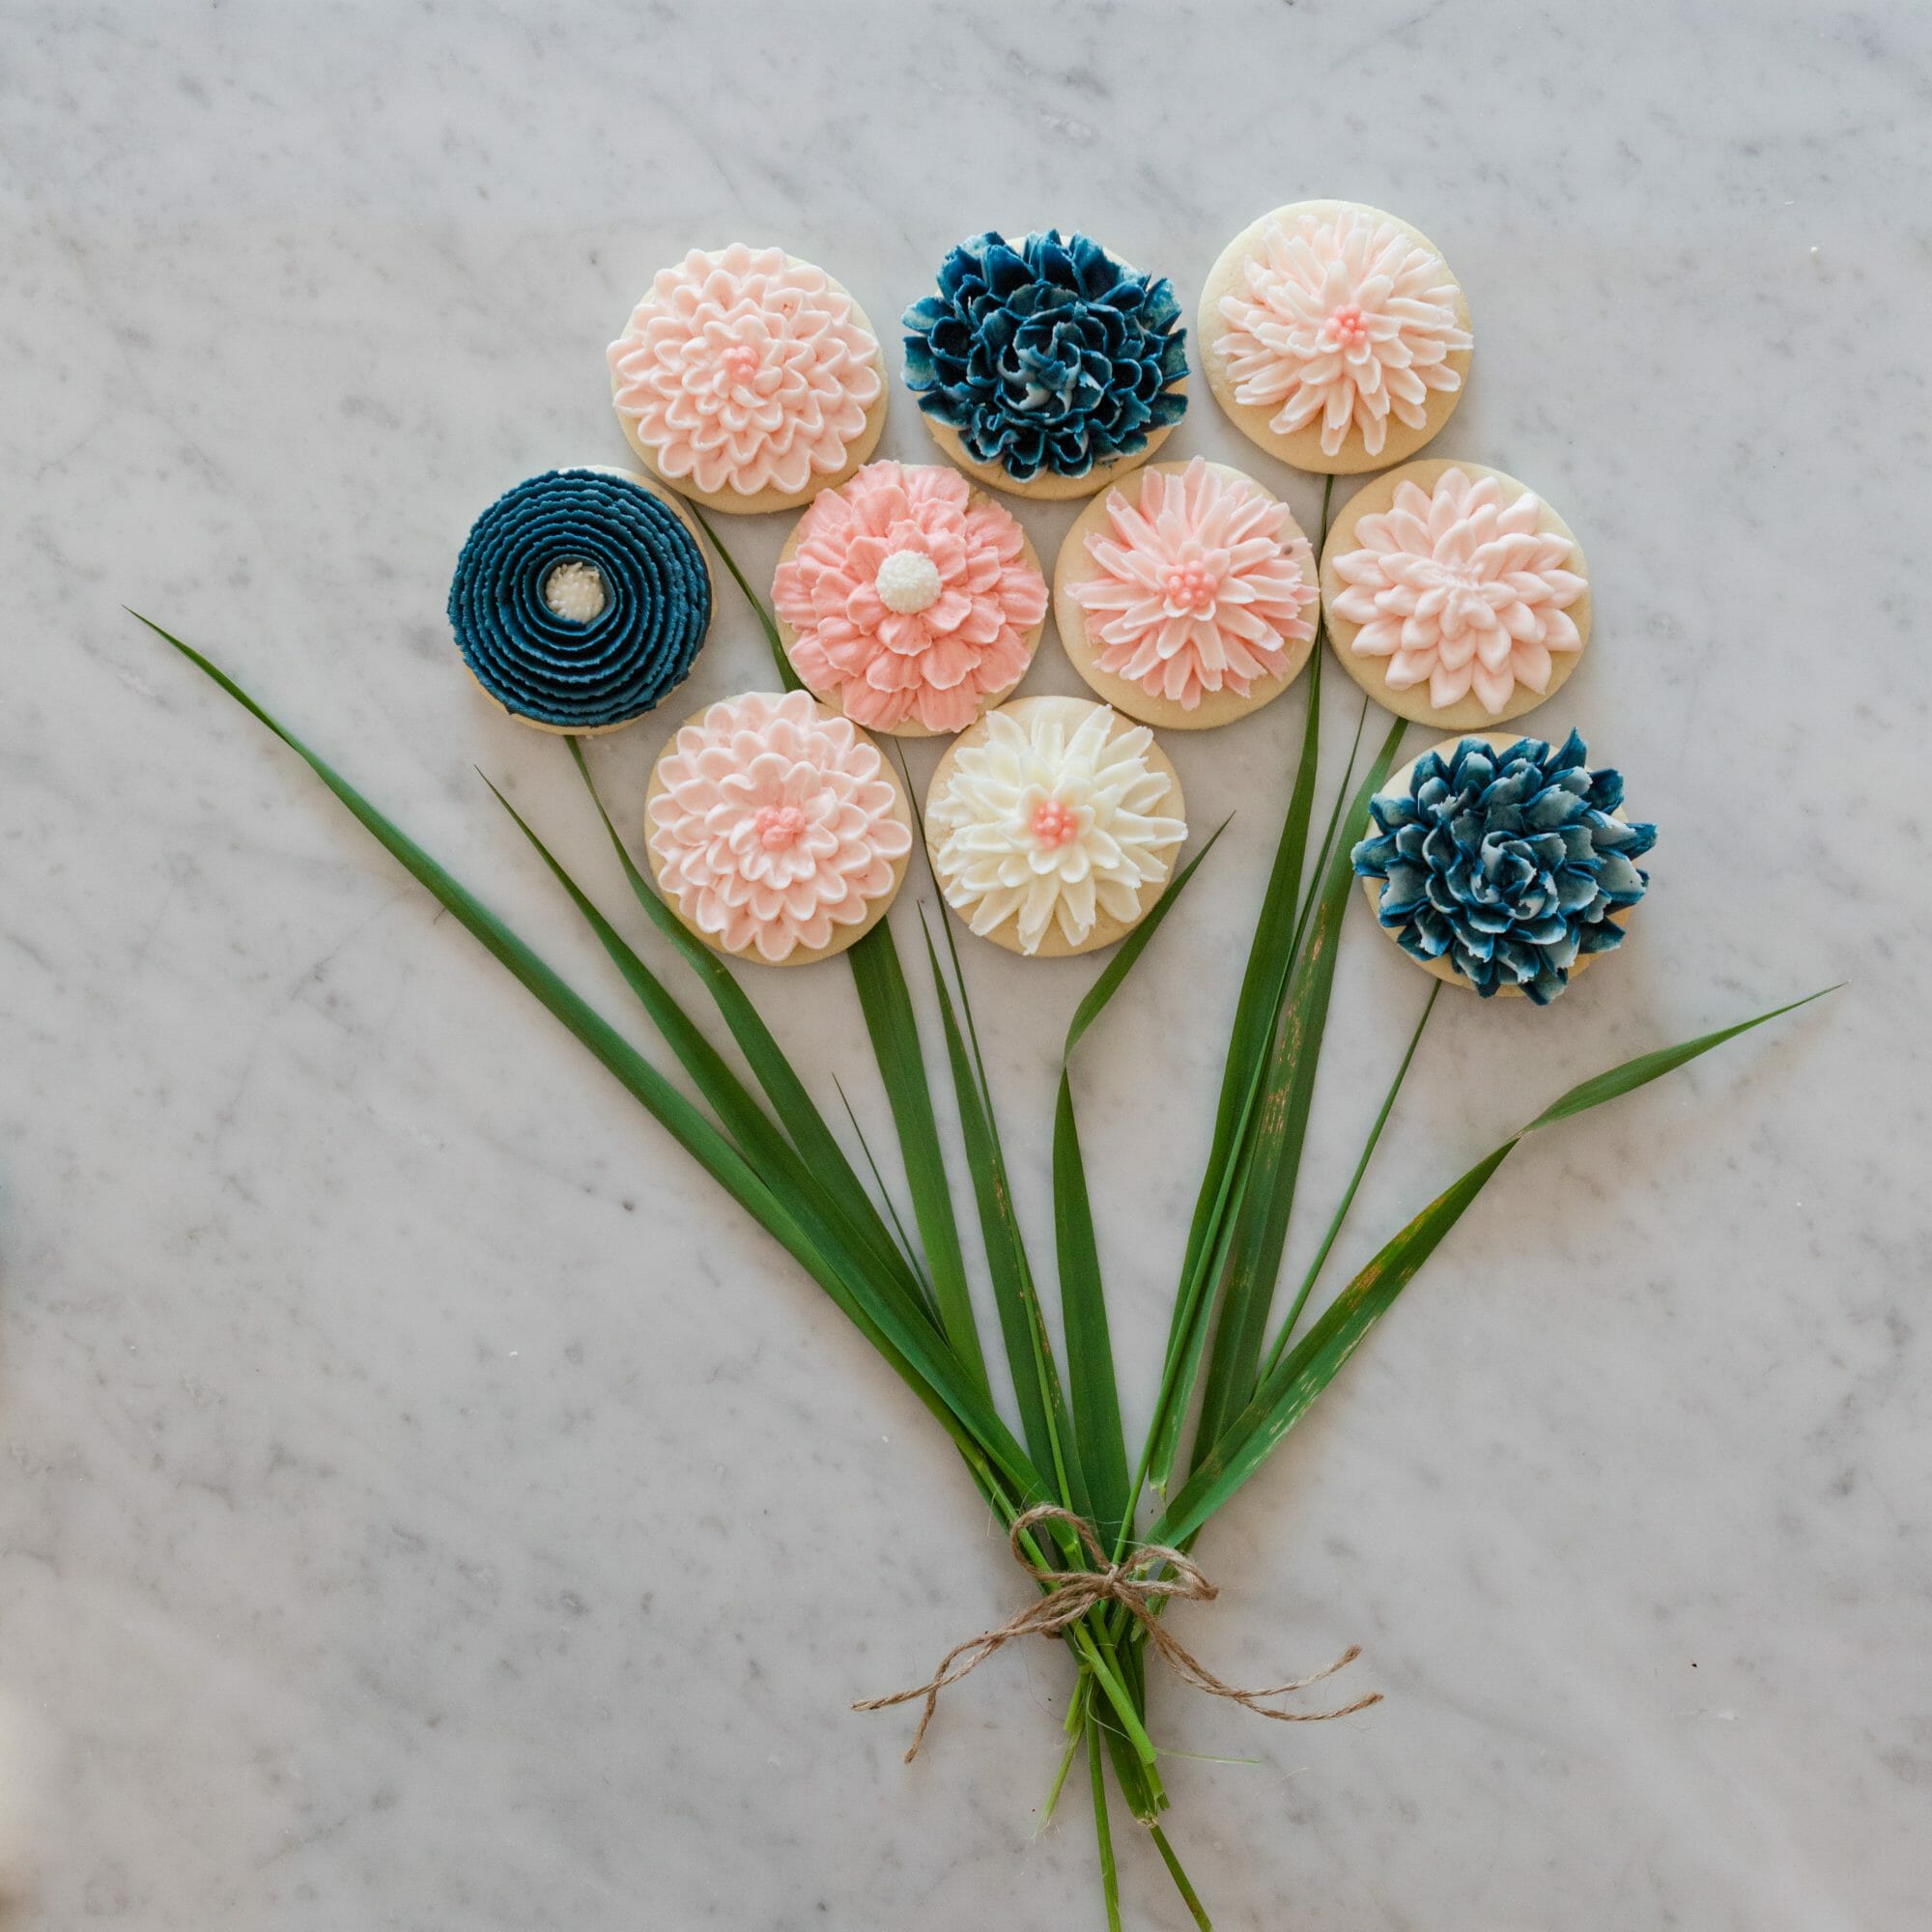 Flower Market || JennyCookies.com #flowers #flowerdesserts #desserts #cookies #cupcakes #jennycookies